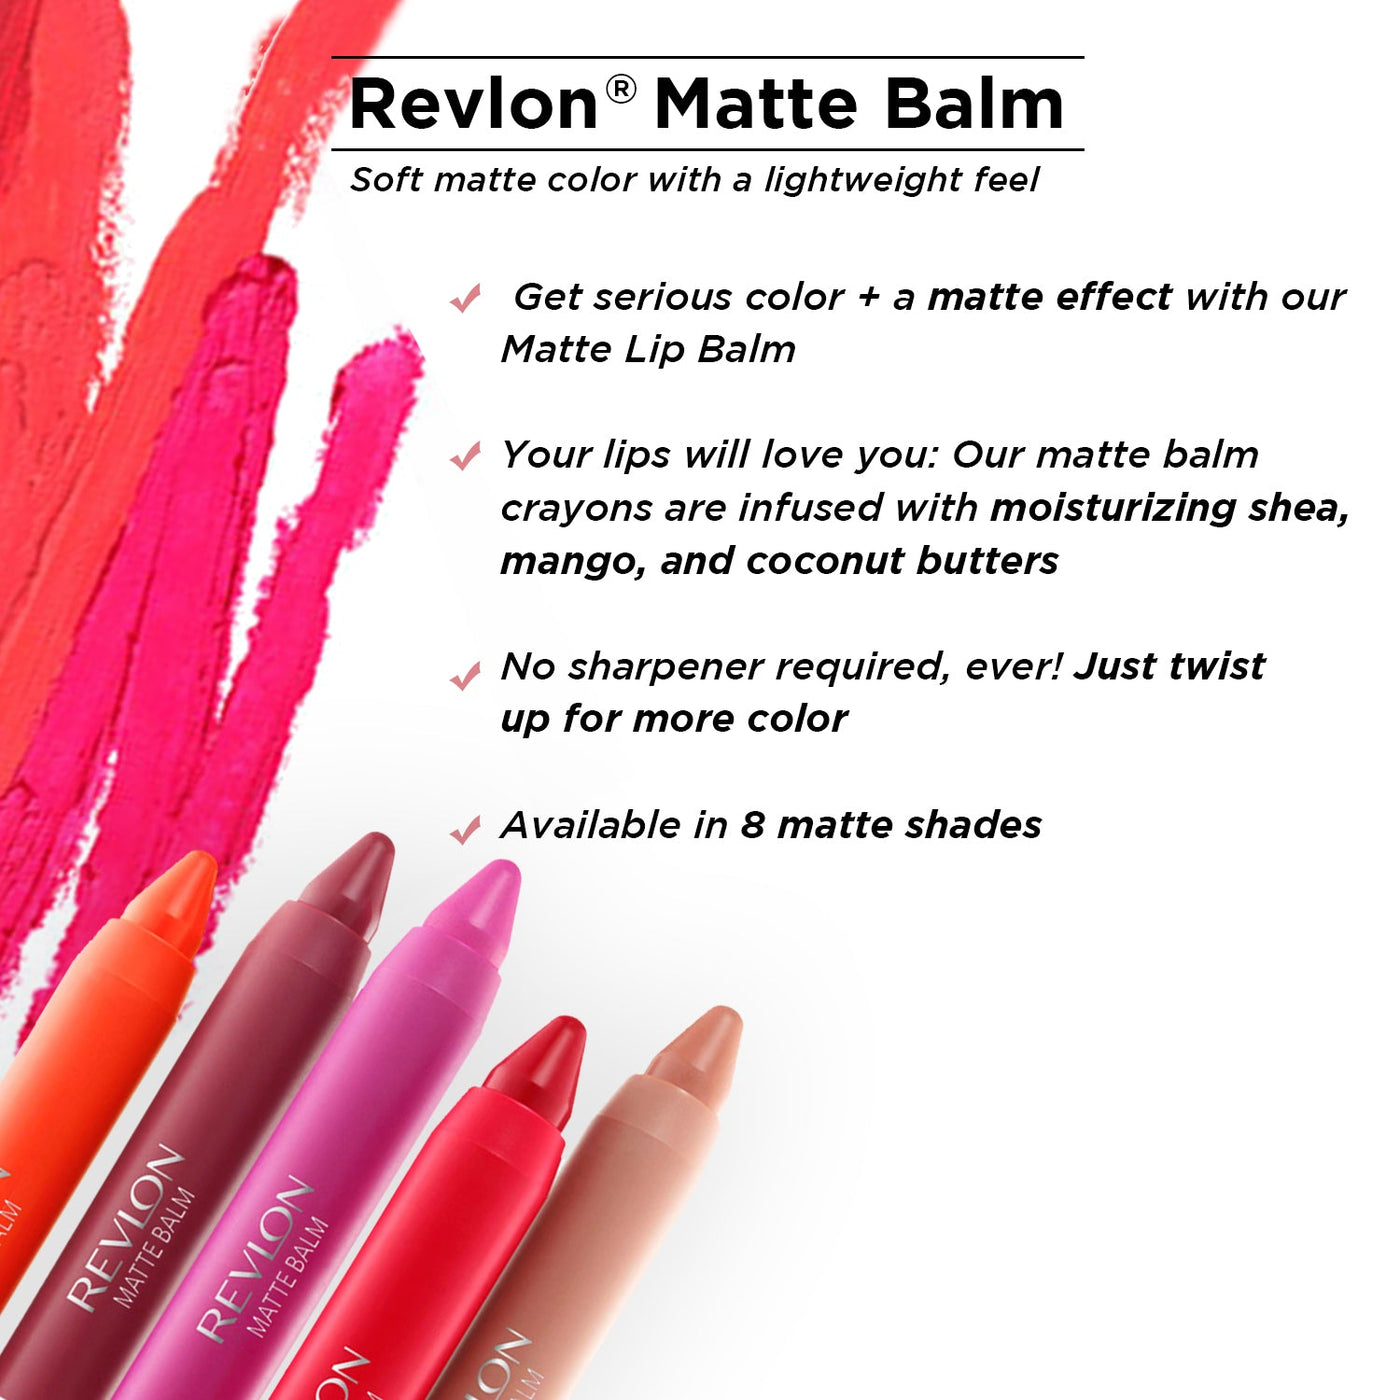 Revlon Matte Balm - Special Offer